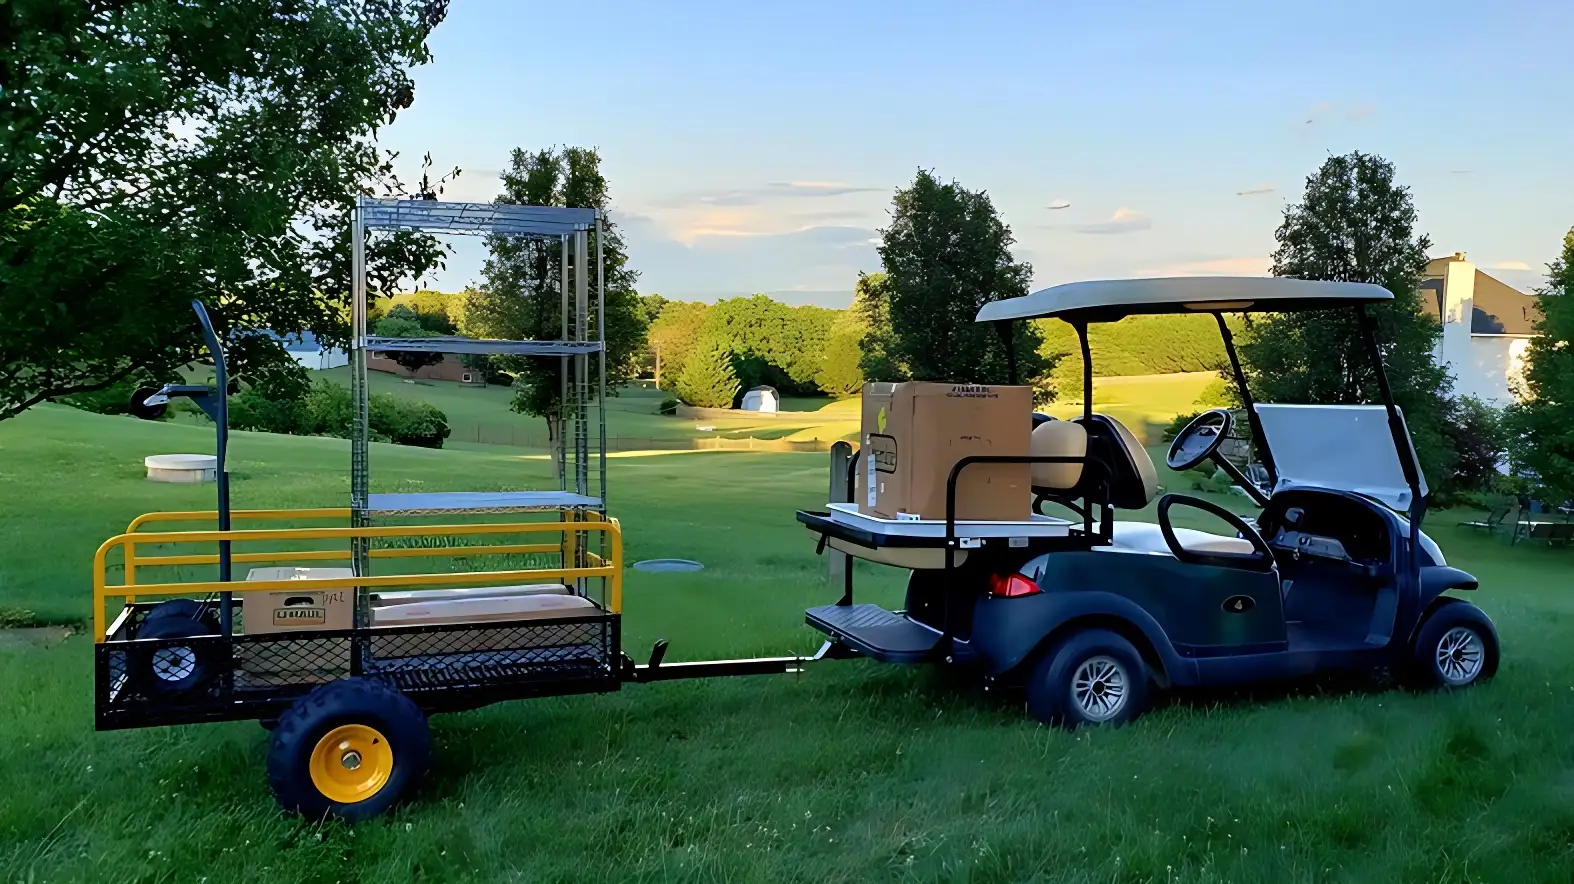 Trailer Hitch For Golf Cart